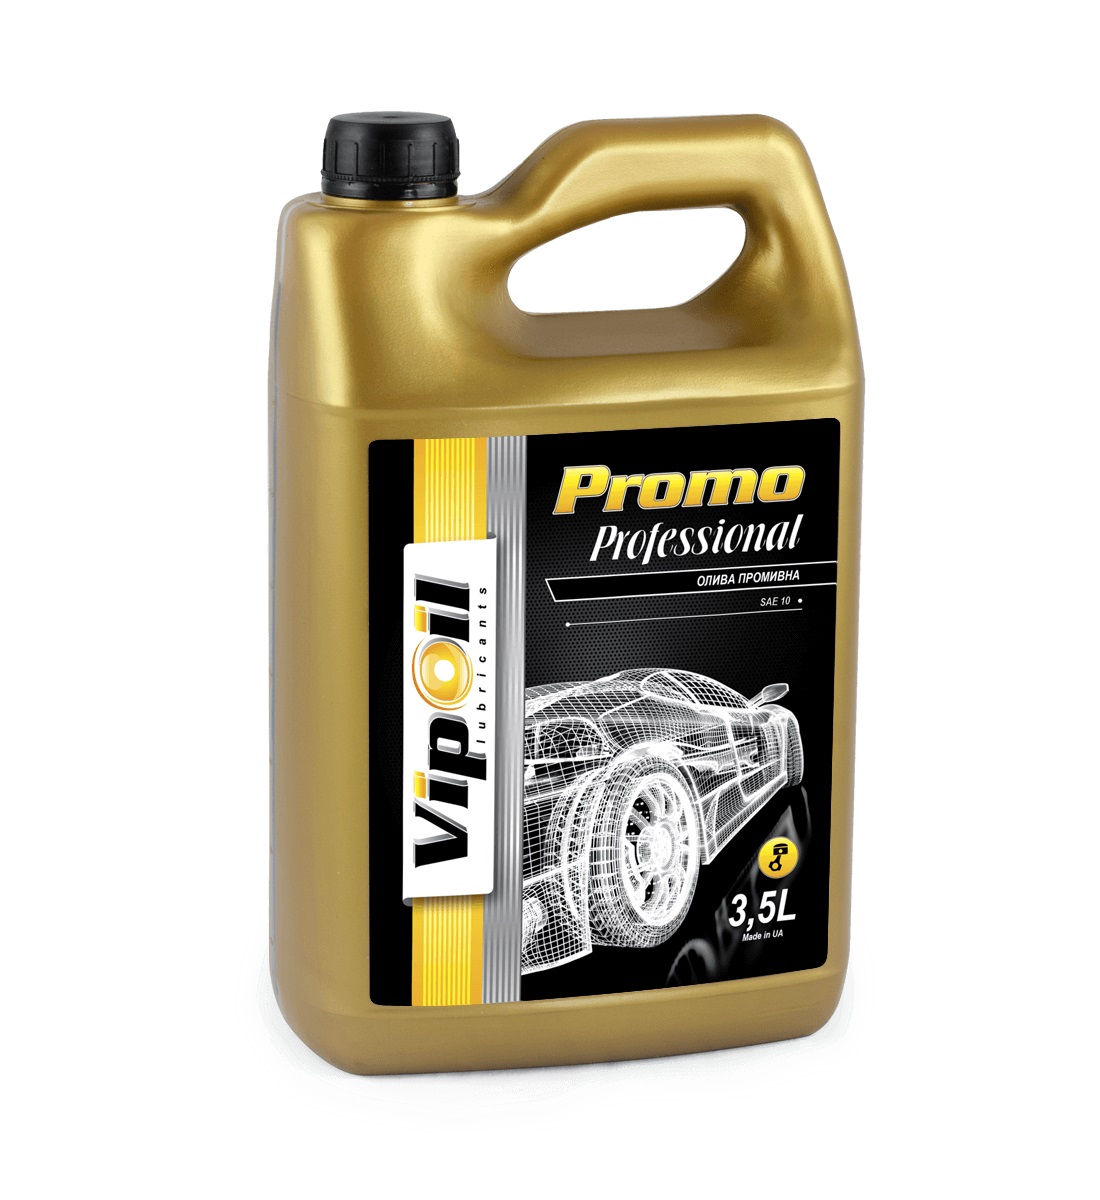 VipOil 0162854 Motor oil Vipoil Professional Promo, 3.5 l 0162854